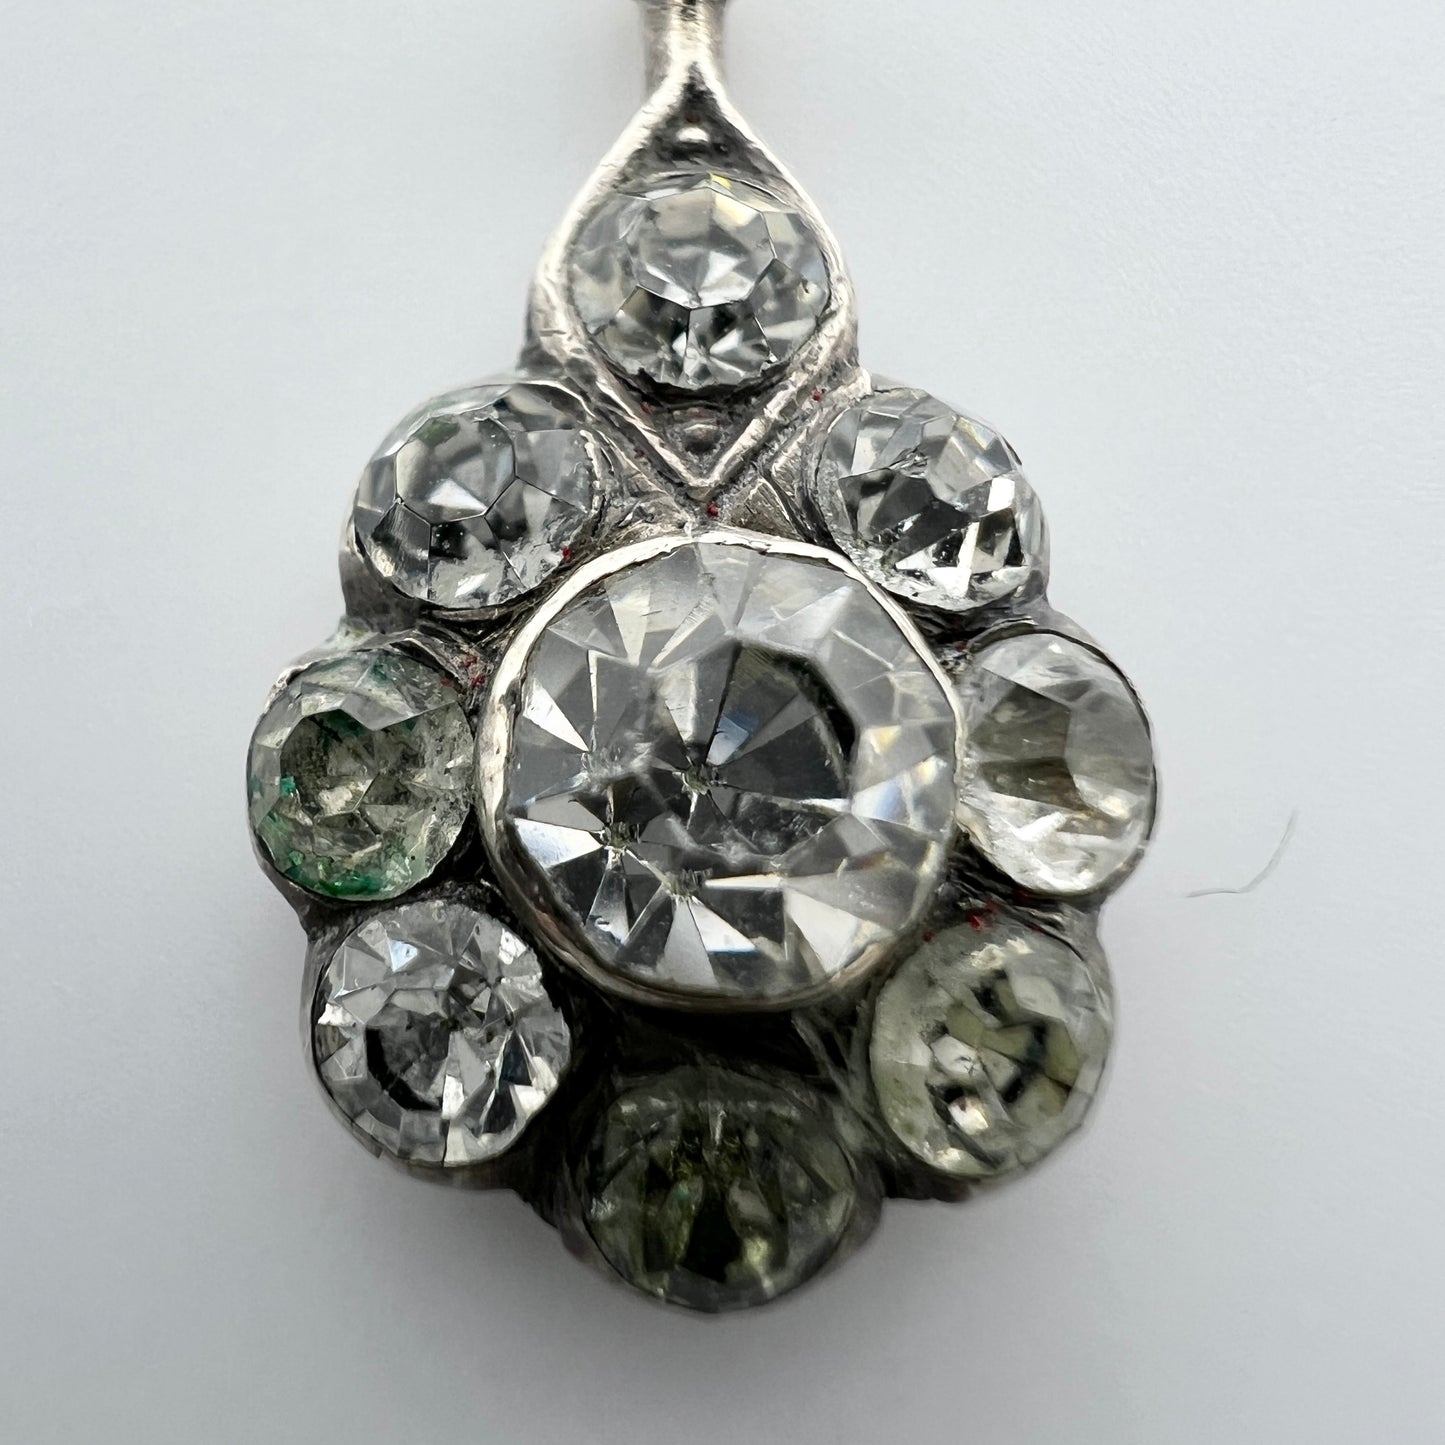 Knoll & Pregizer, Germany c 1920s Sterling Silver Paste Stone Pendant Necklace.